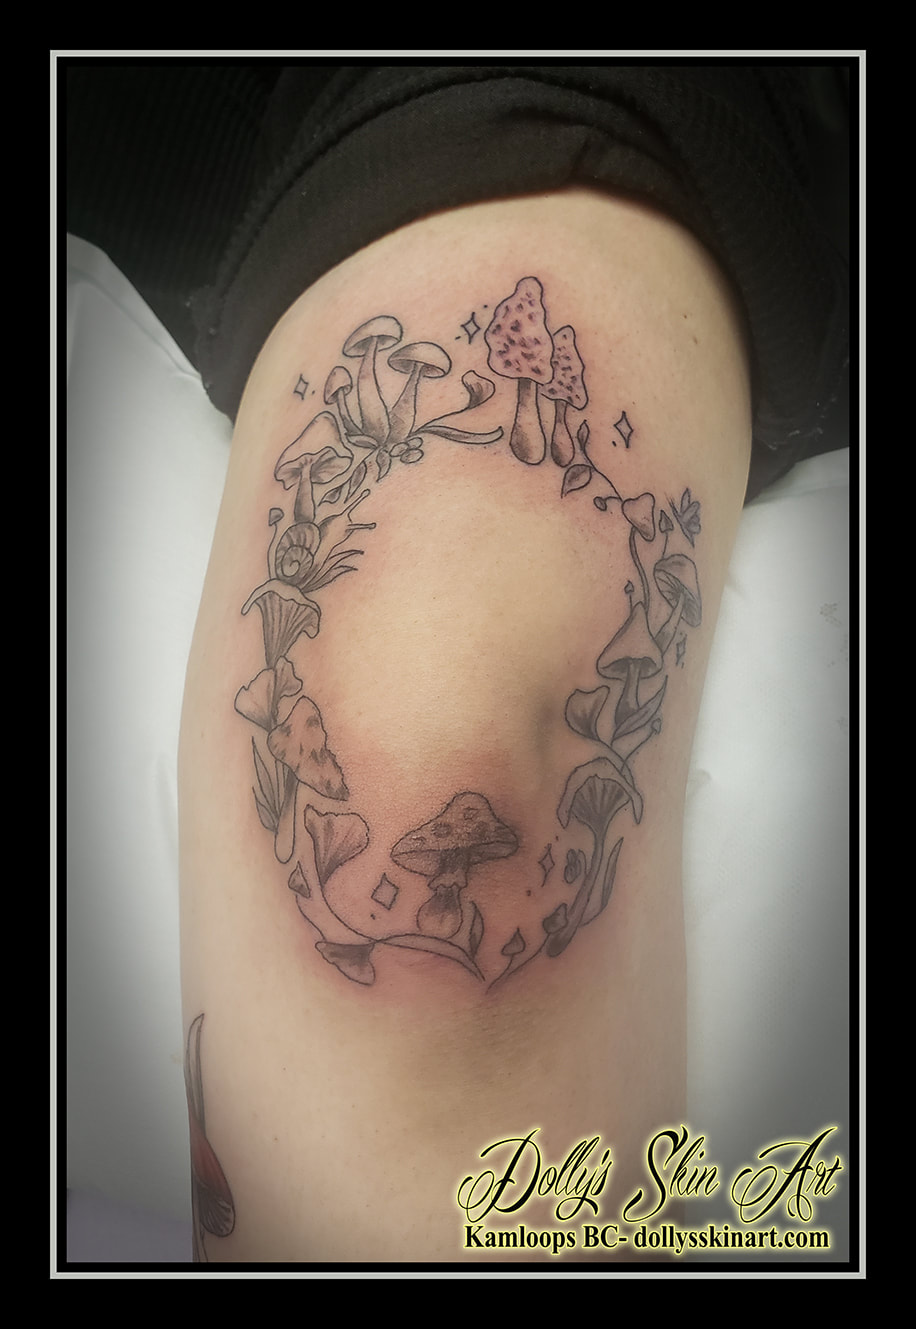 fairy ring tattoo knee mushrooms black and grey shading kneecap tattoo dolly's skin art kamloops